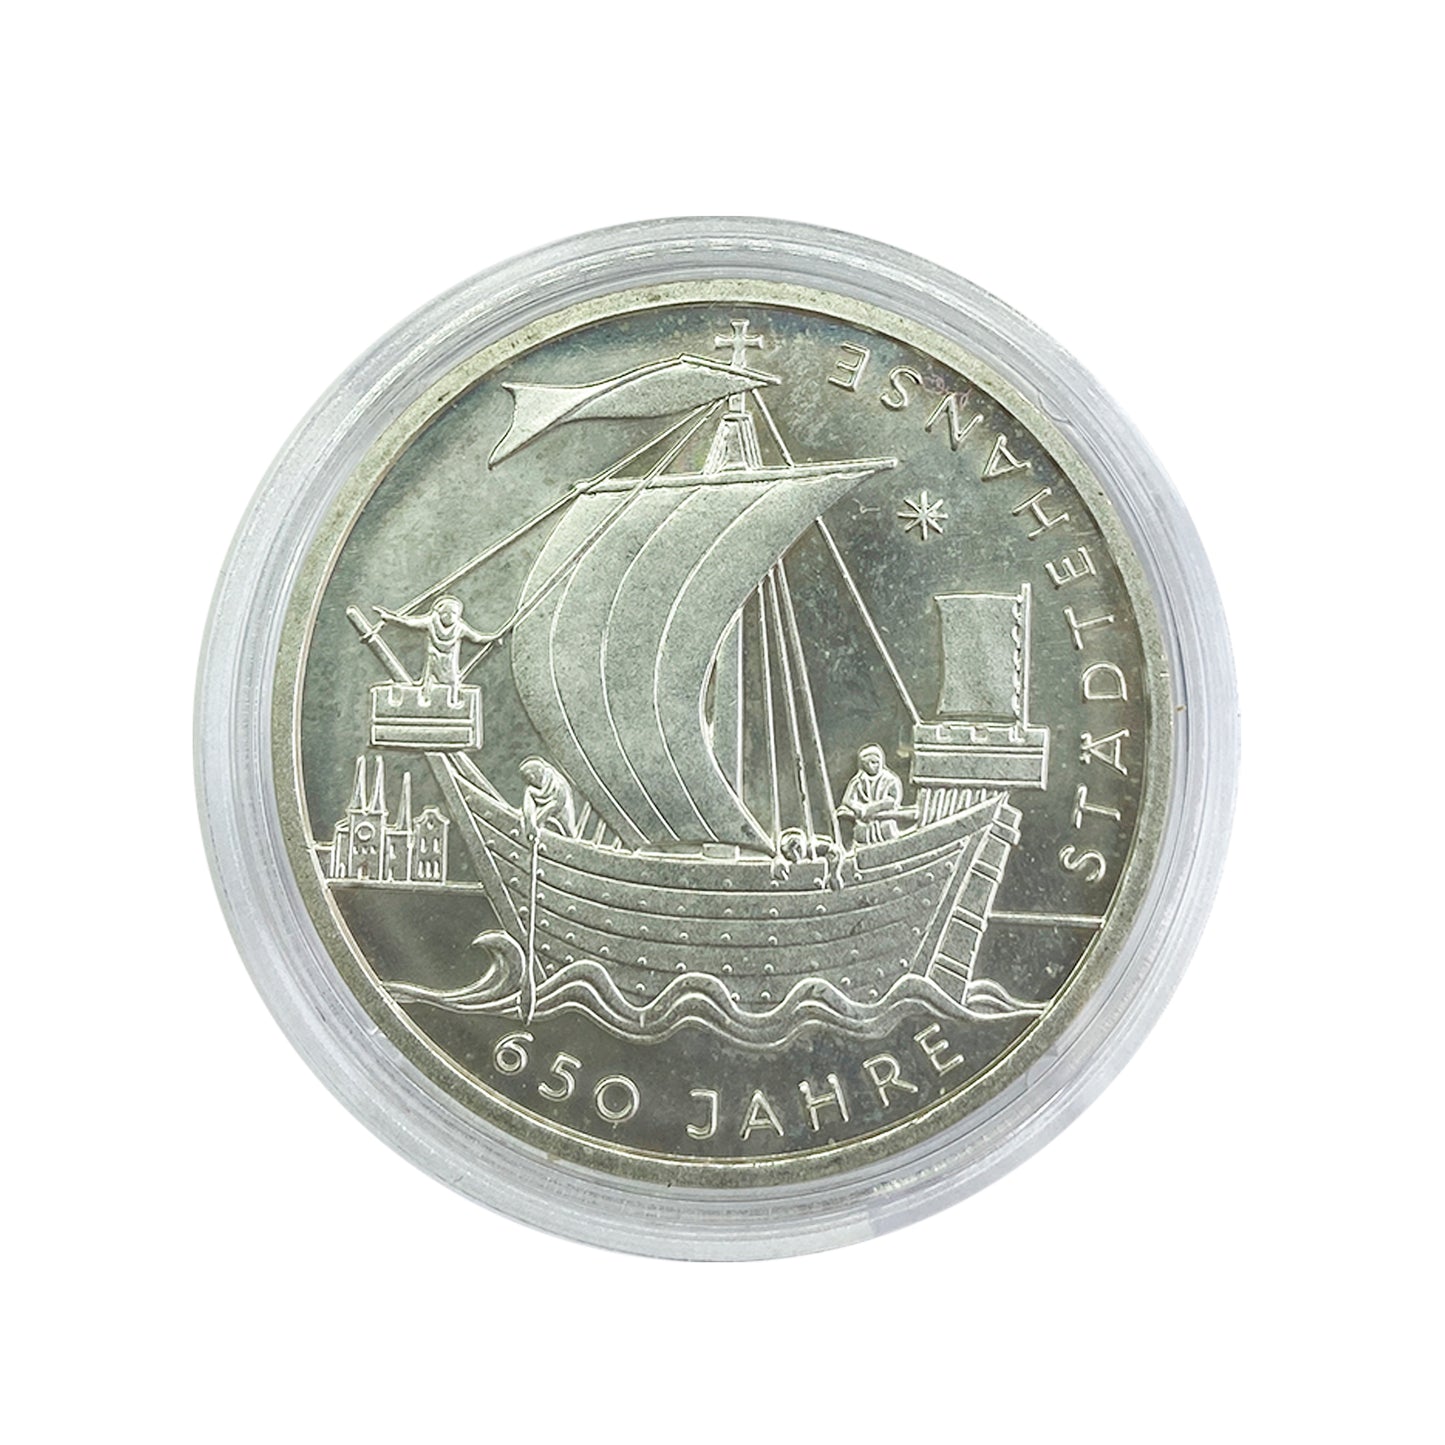 Alemania - Moneda 10 euros plata 2006 - Liga Hanseática